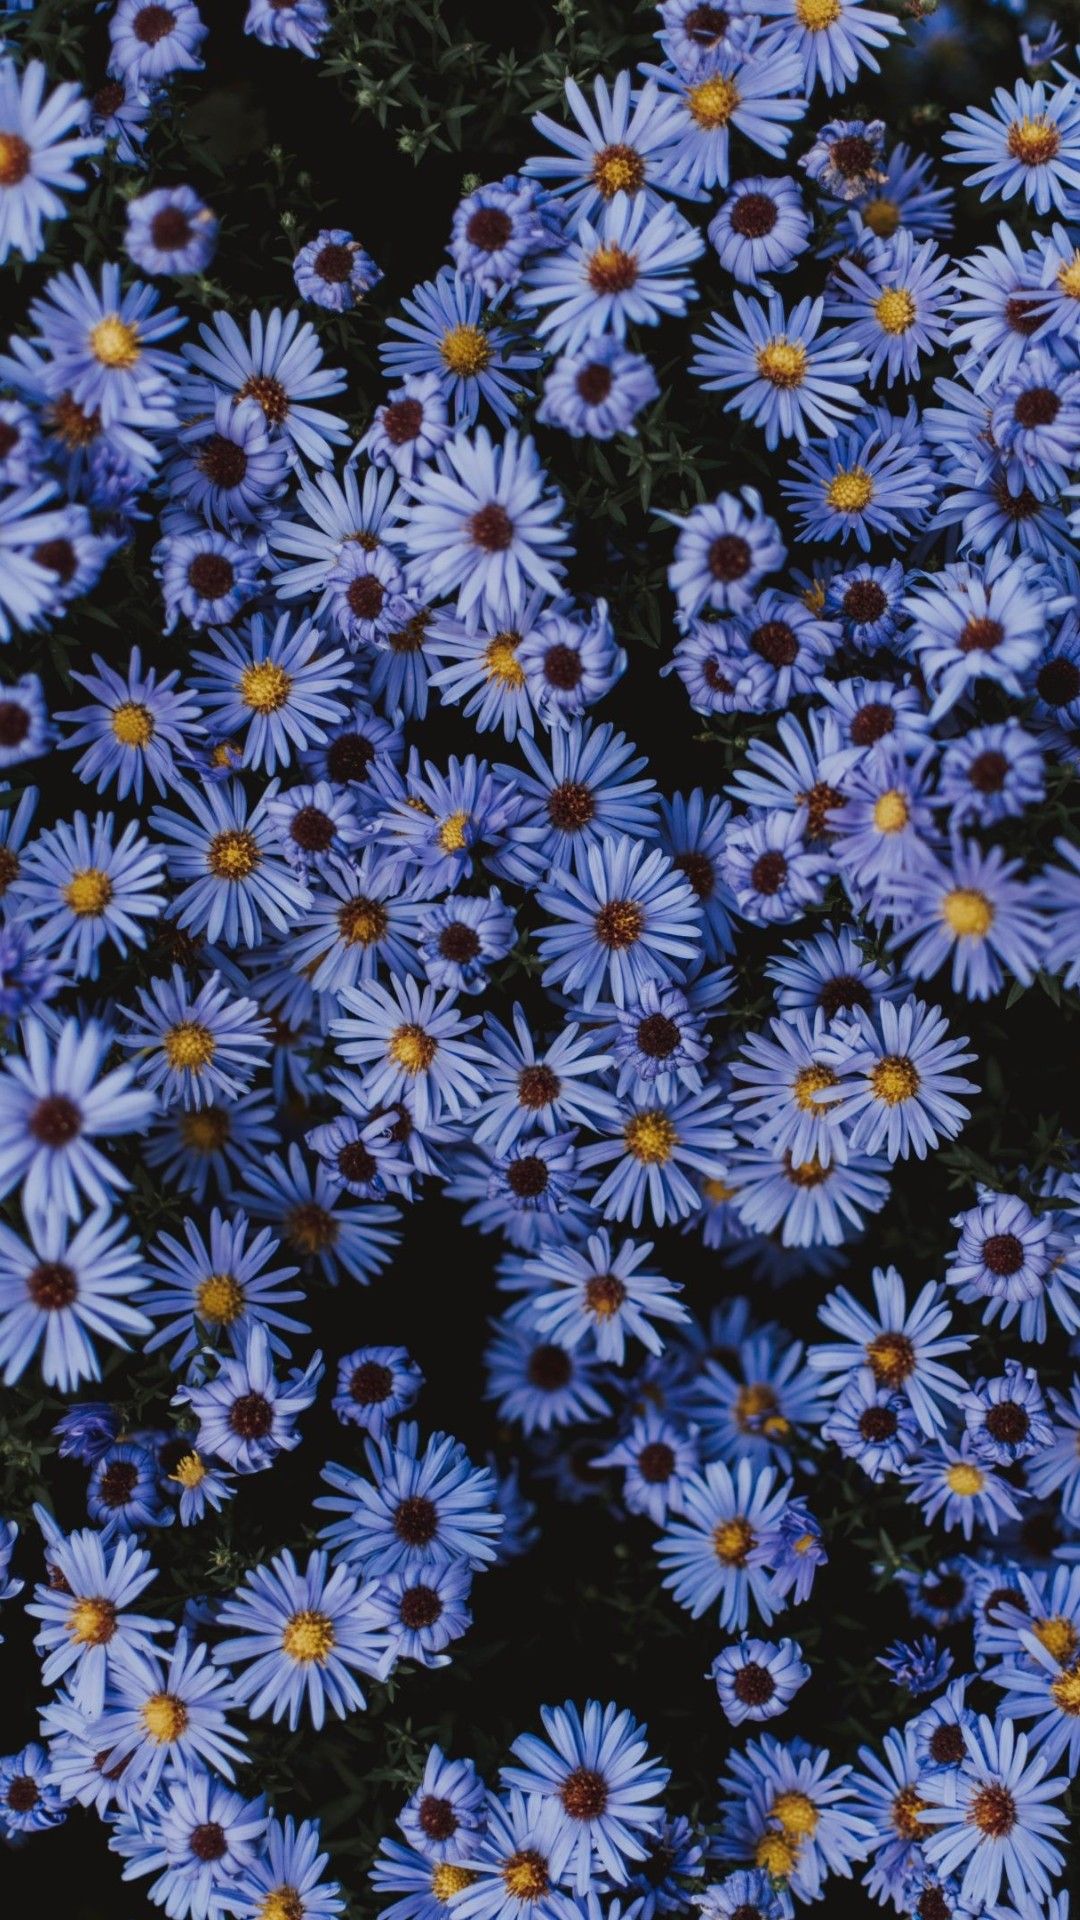 Blue flowers on a black background - Flower, daisy, tulip